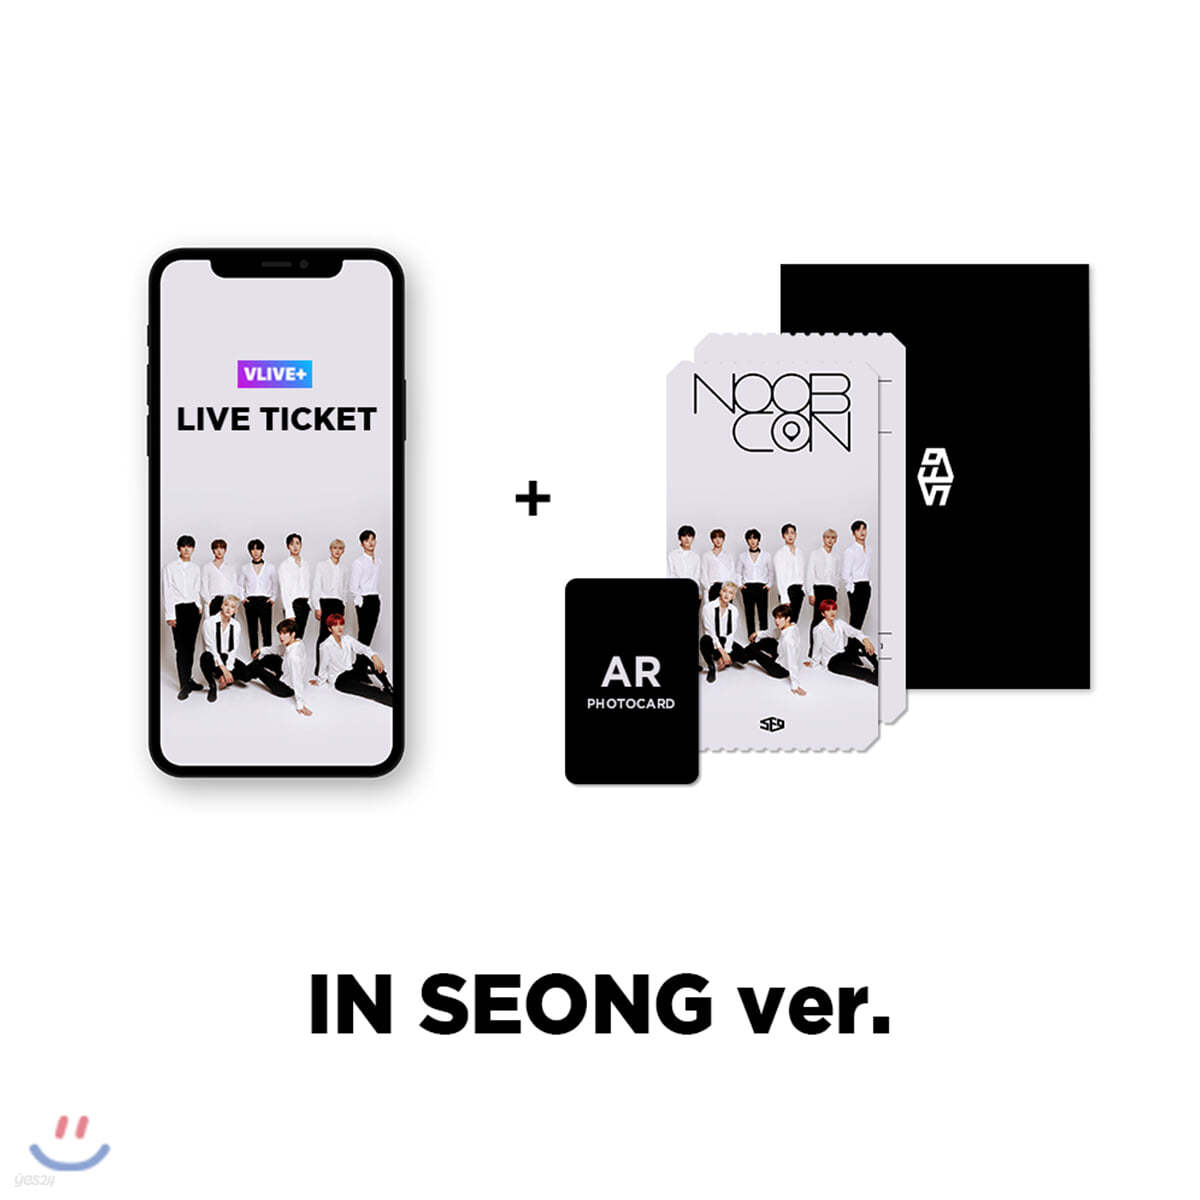 NOOB CON - SF9 LIVE 관람권 + 스페셜티켓KIT (인성 ver.)